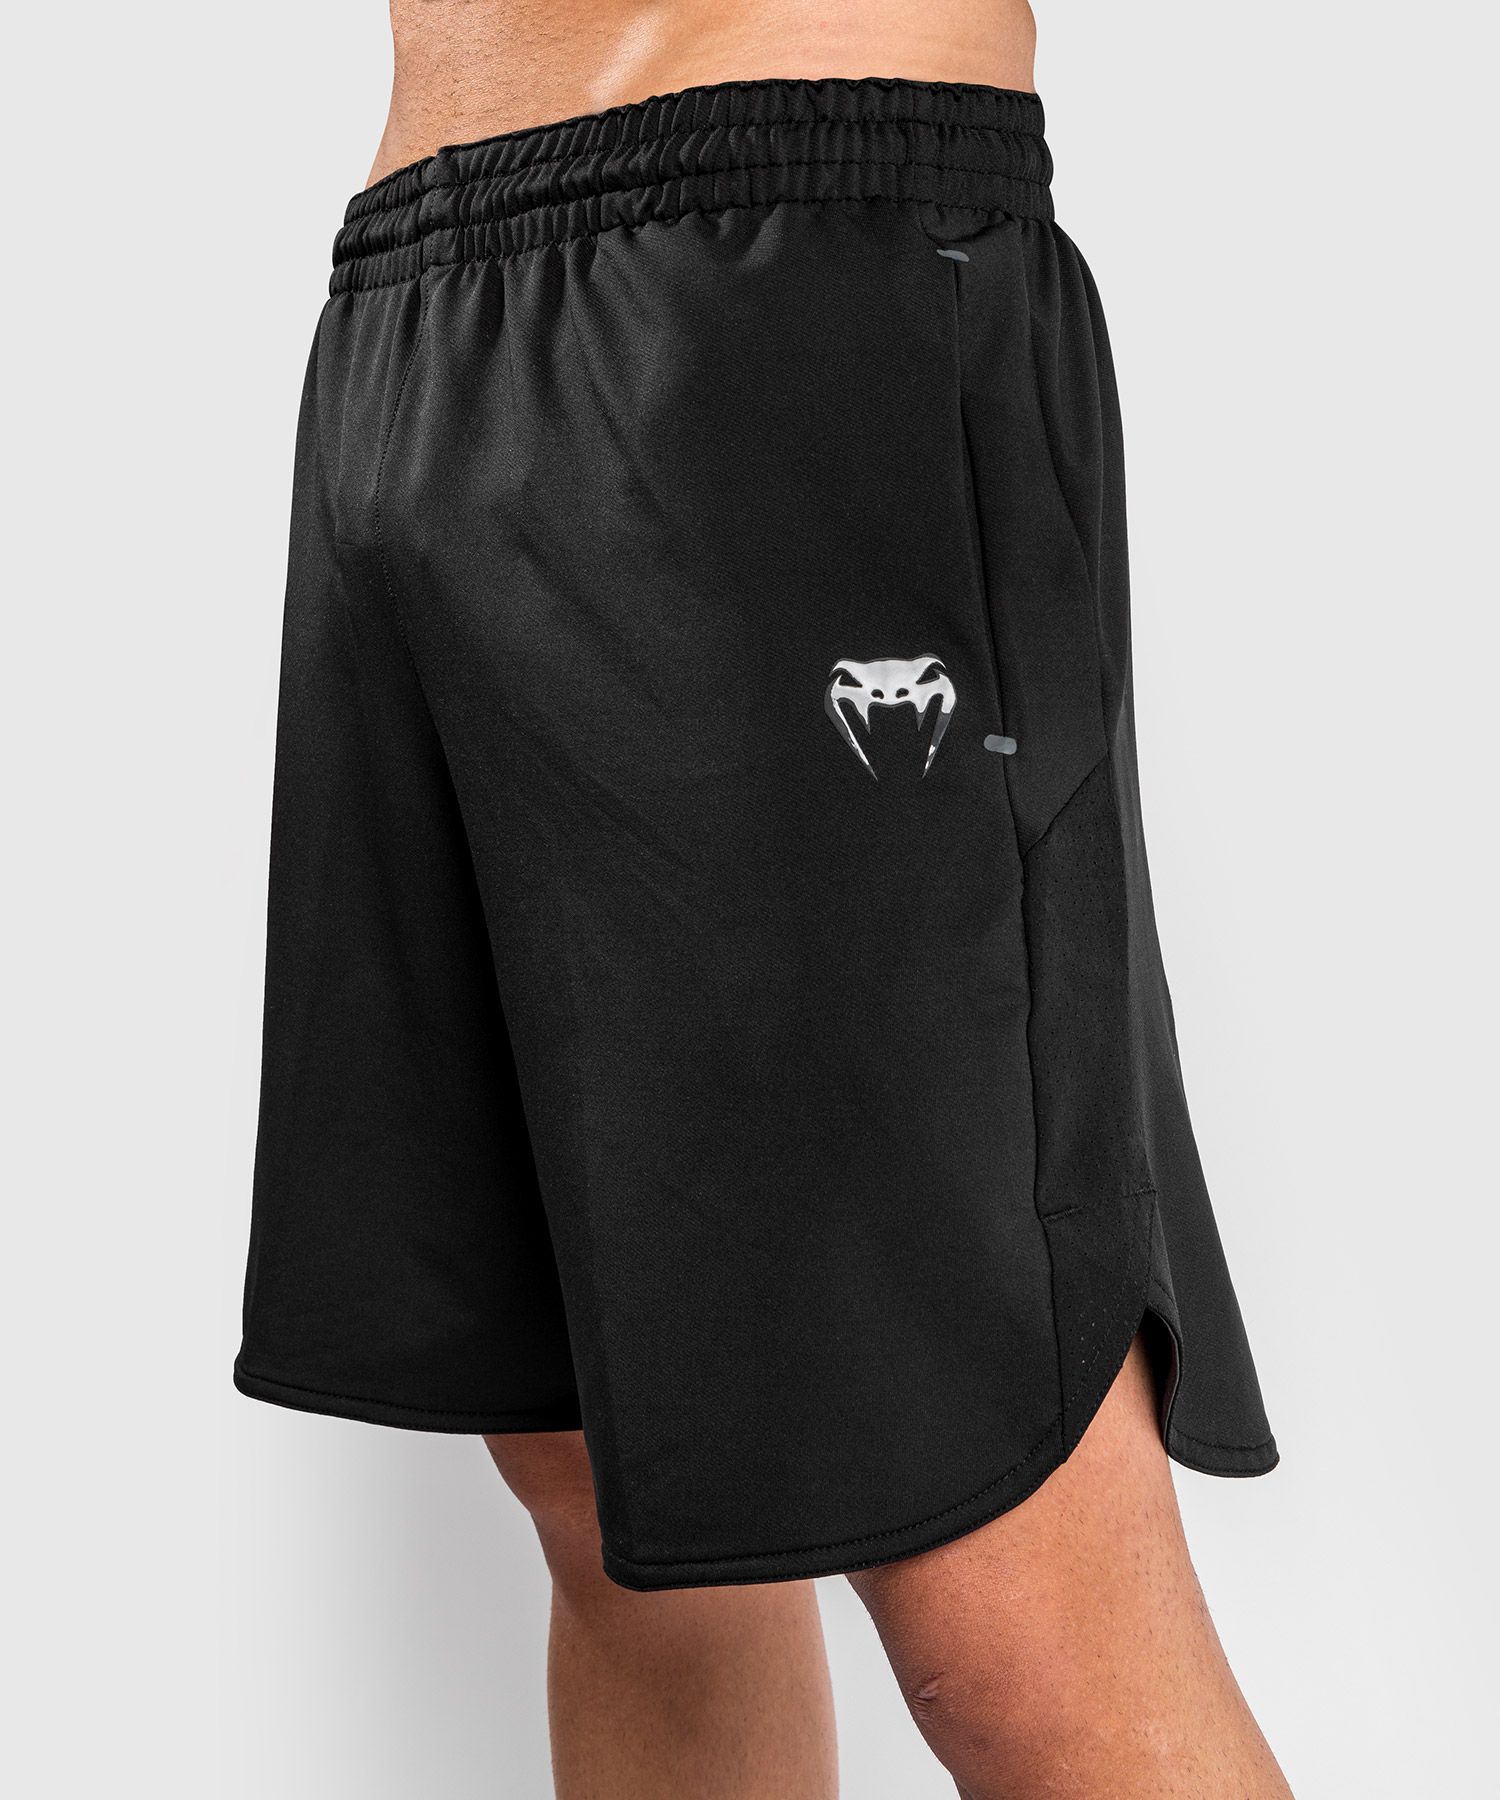 Pantalones cortos de deporte Venum Contender Evo - Negro/Negro